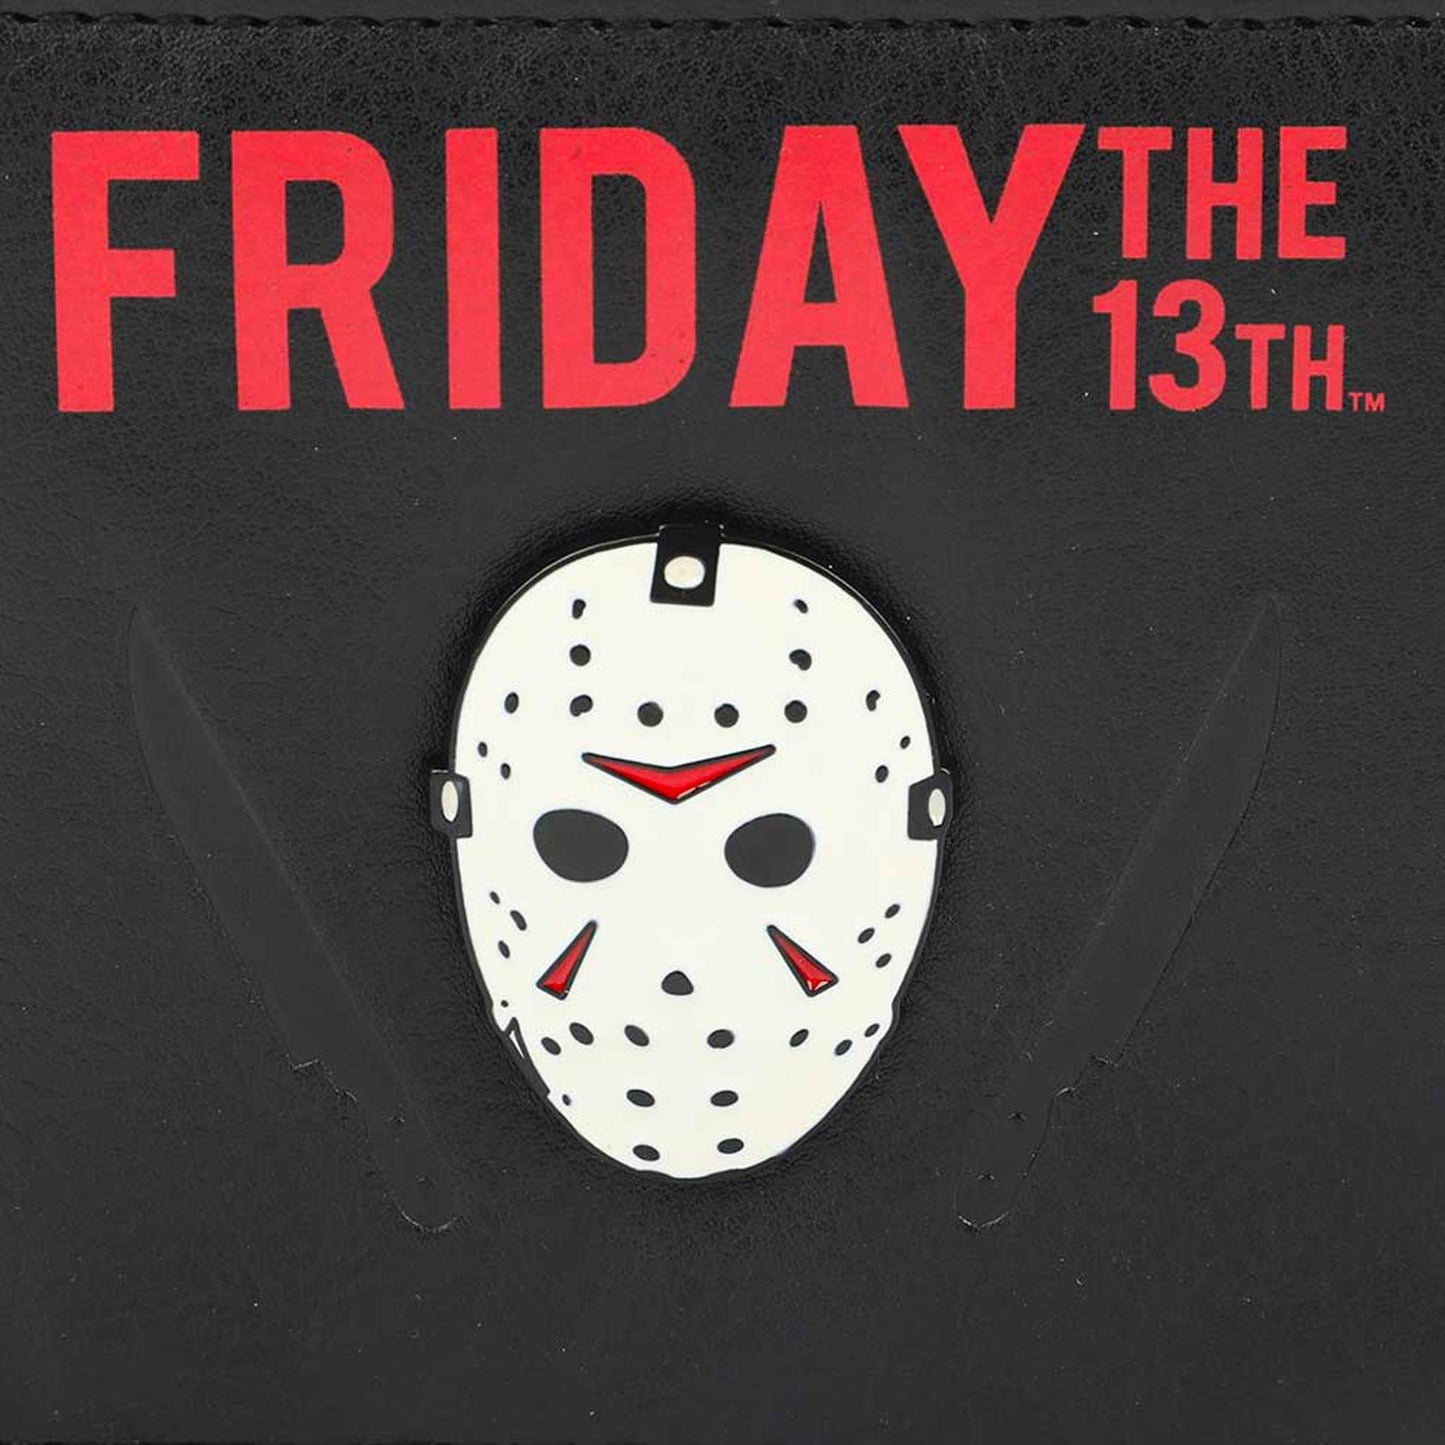 Jason Mask (Friday the 13th) Bi-Fold Wallet